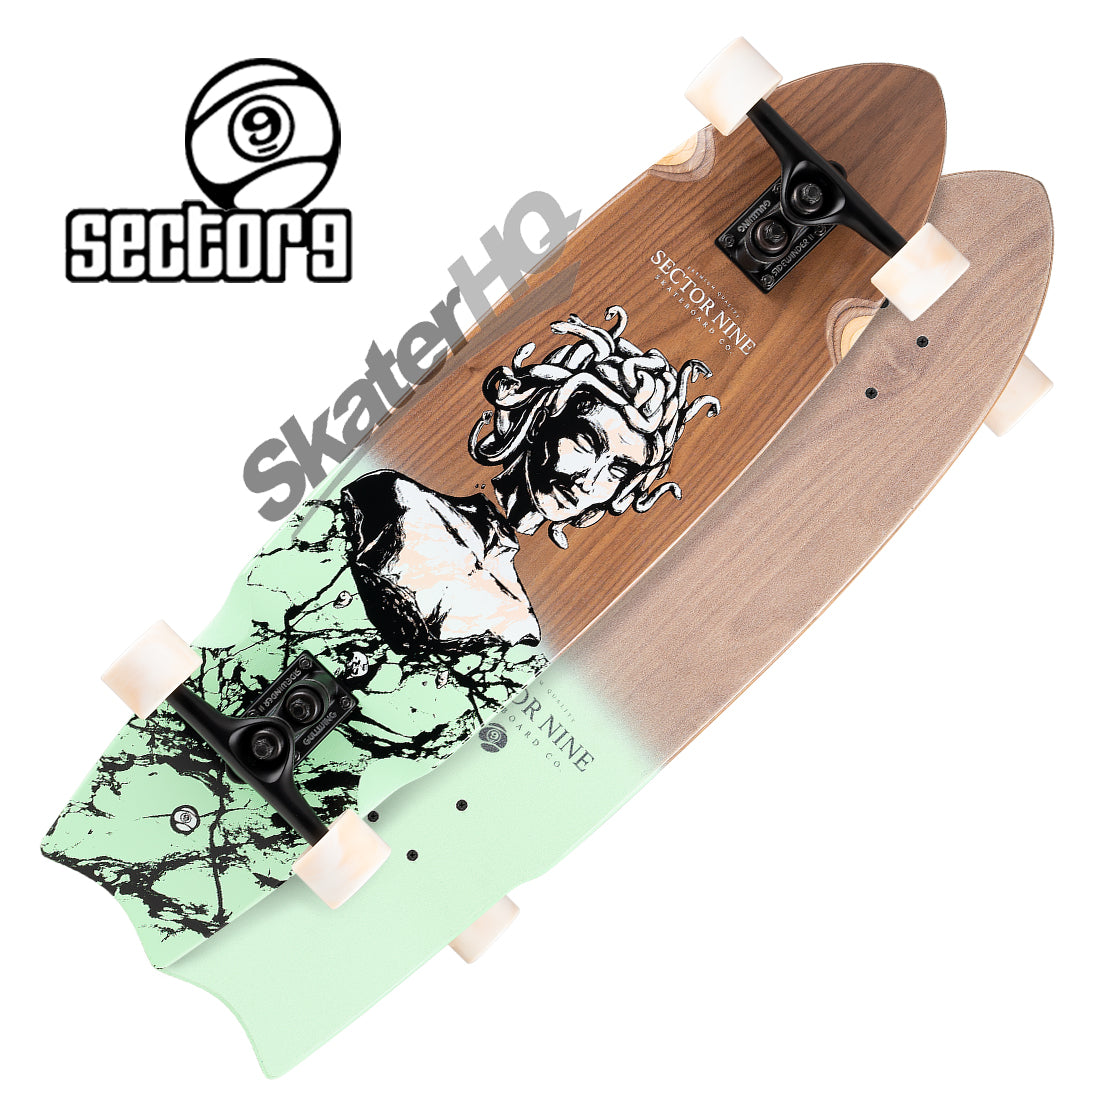 Sector 9 Unagi Gorgon 34.5 Gullwing Complete - Wood/Mint Skateboard Compl Cruisers